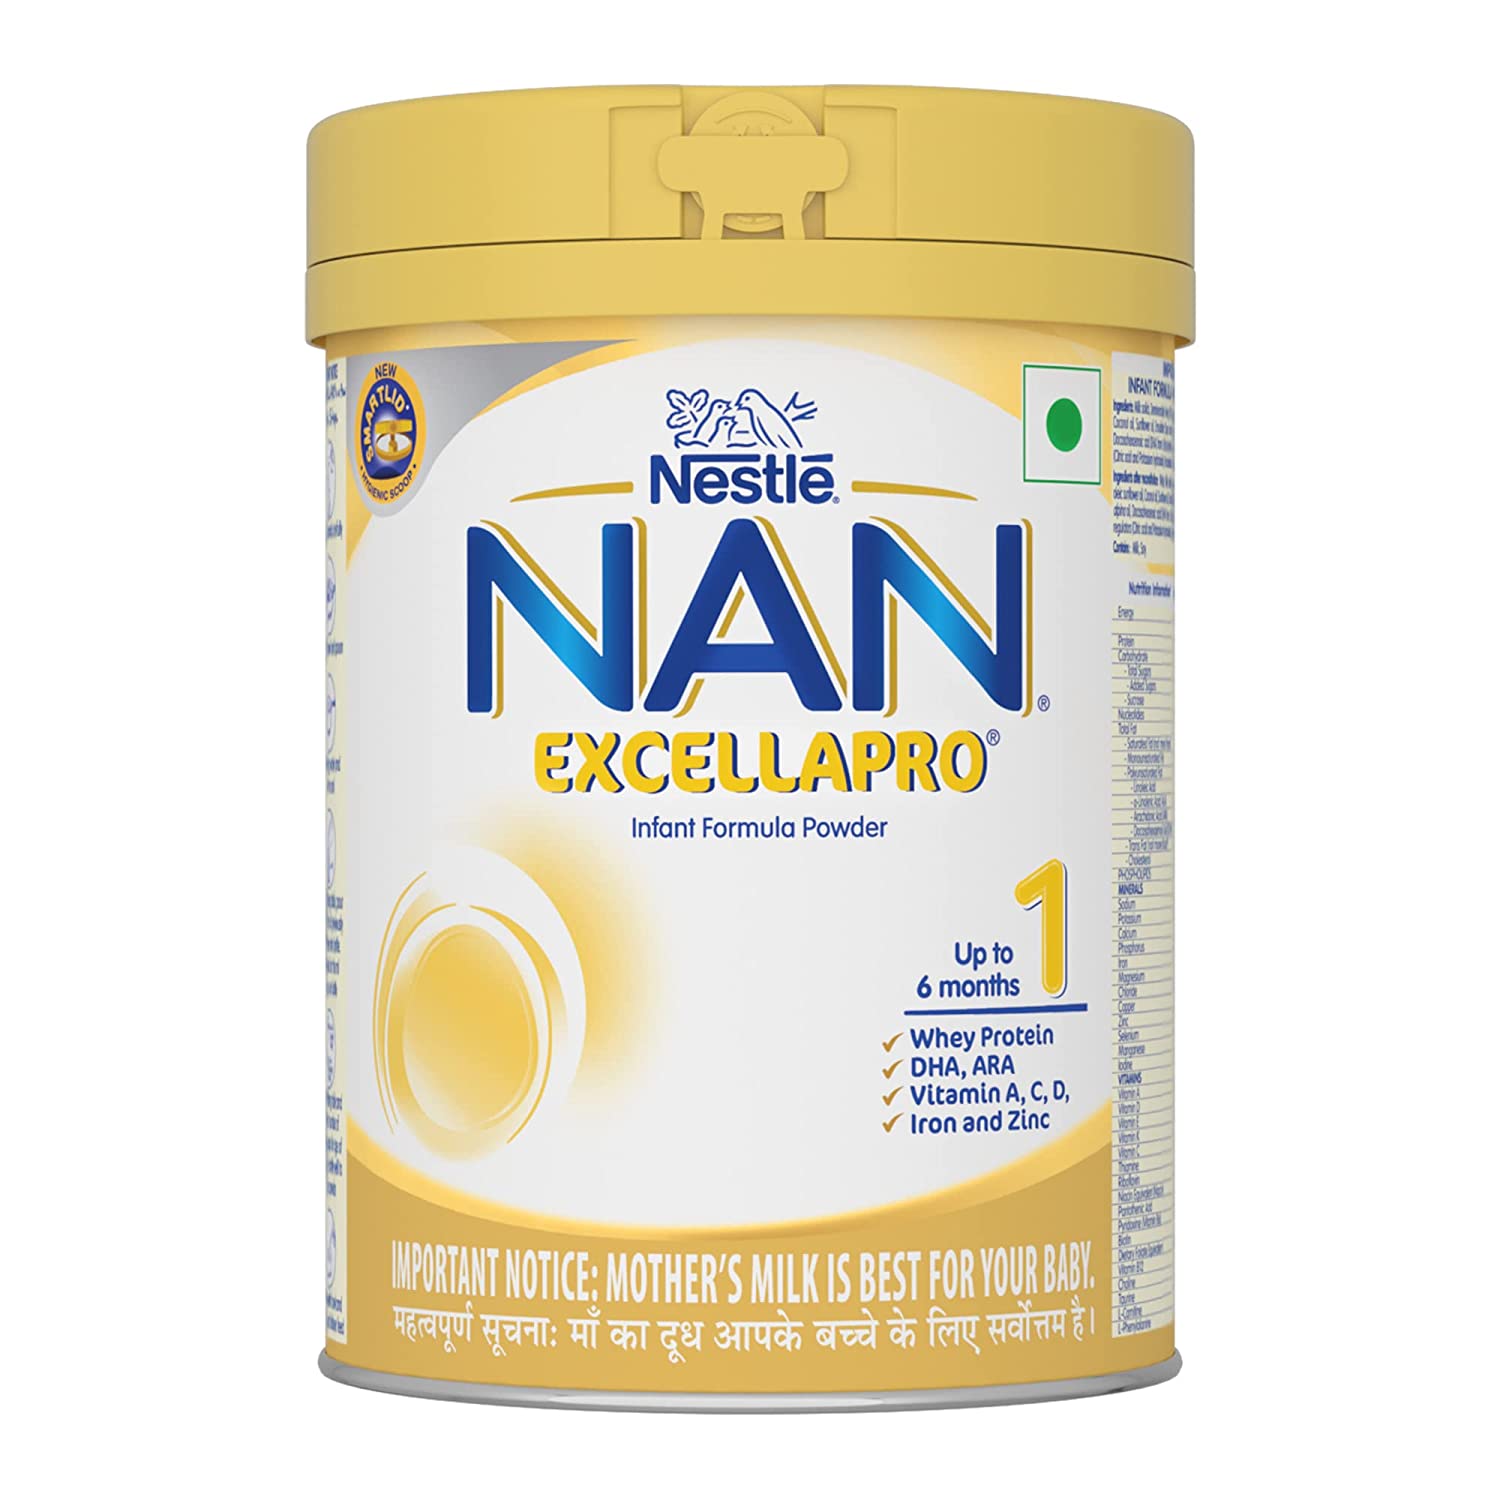 Nestle NAN Excellapro1 Infant Formula Powder